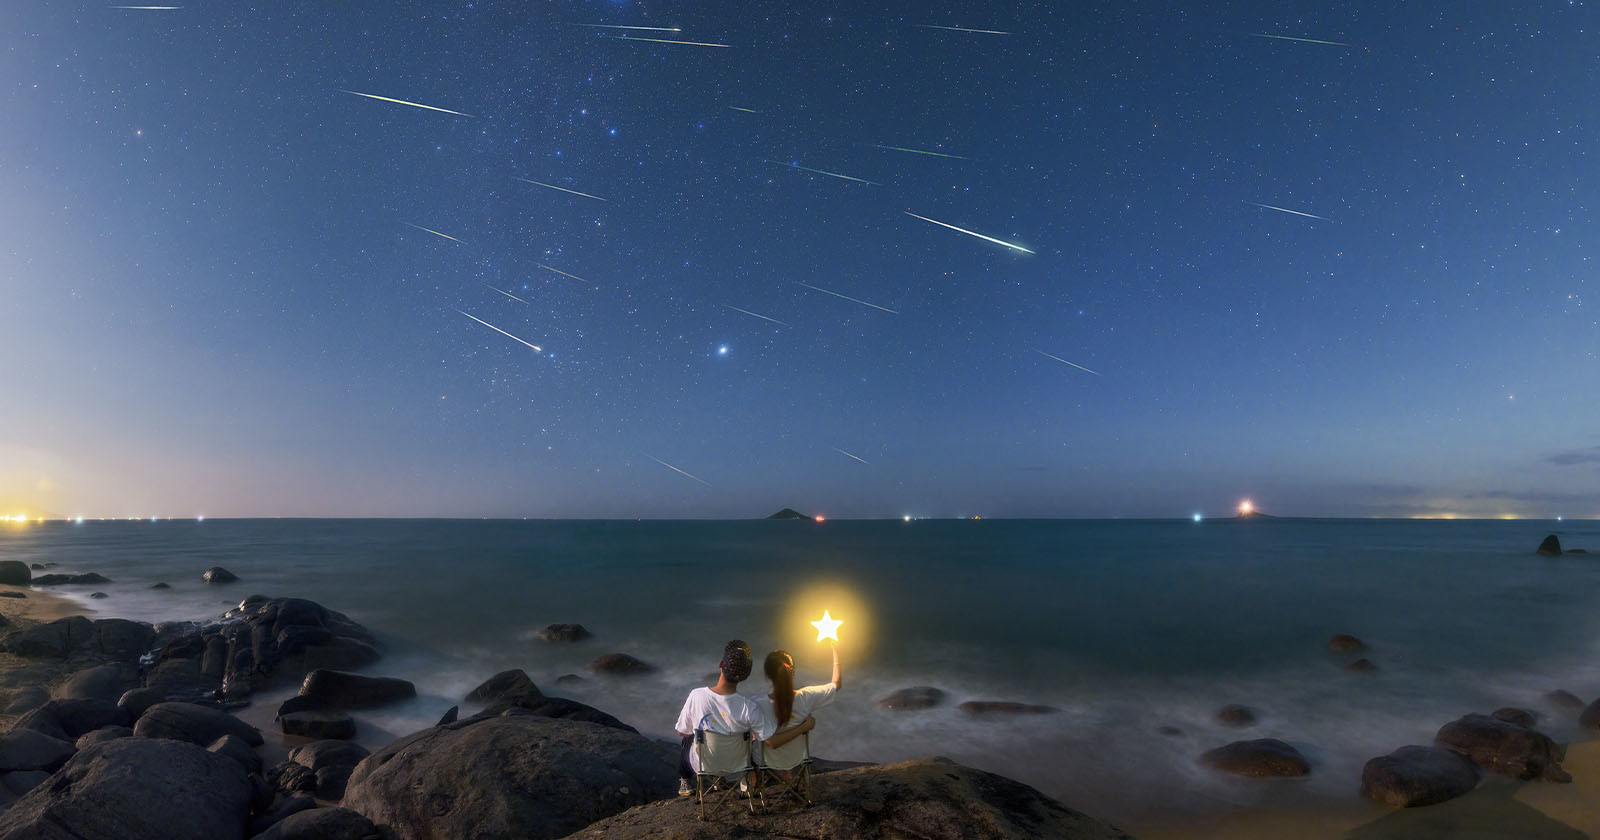  photographer wife enjoy meteor shower dazzling photo 